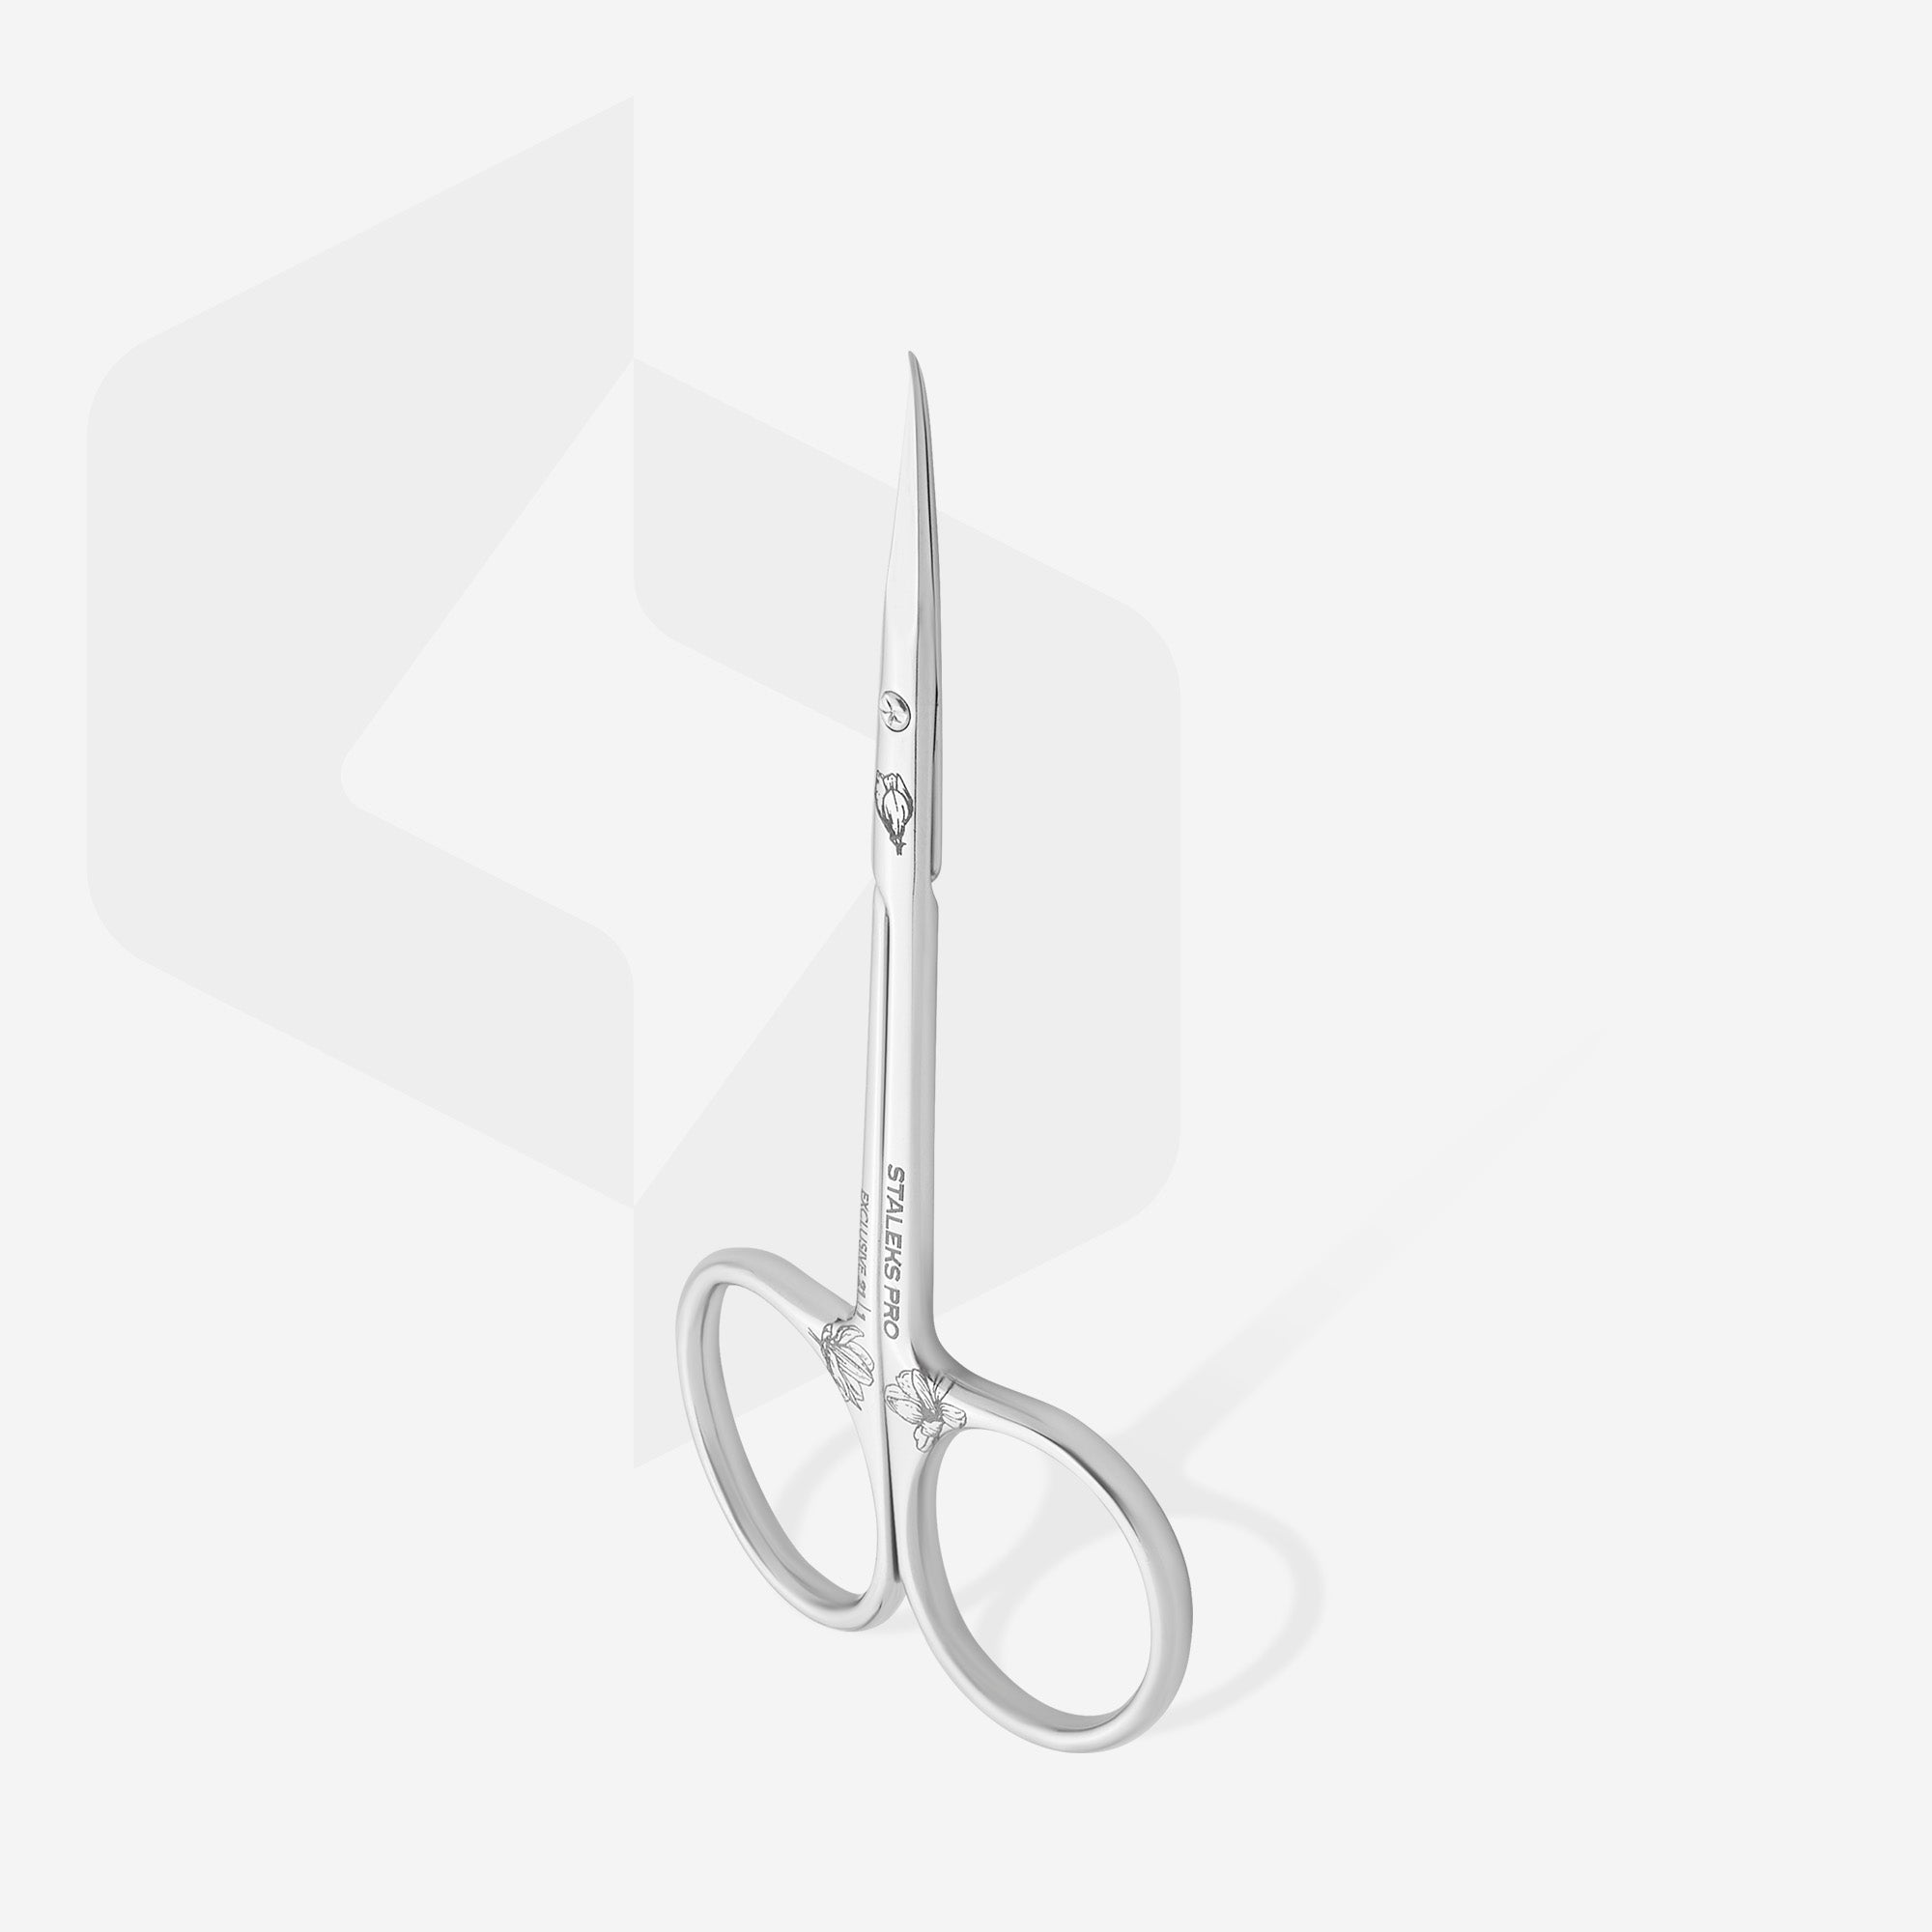 Staleks Exclusive Cuticle Scissors 21/1